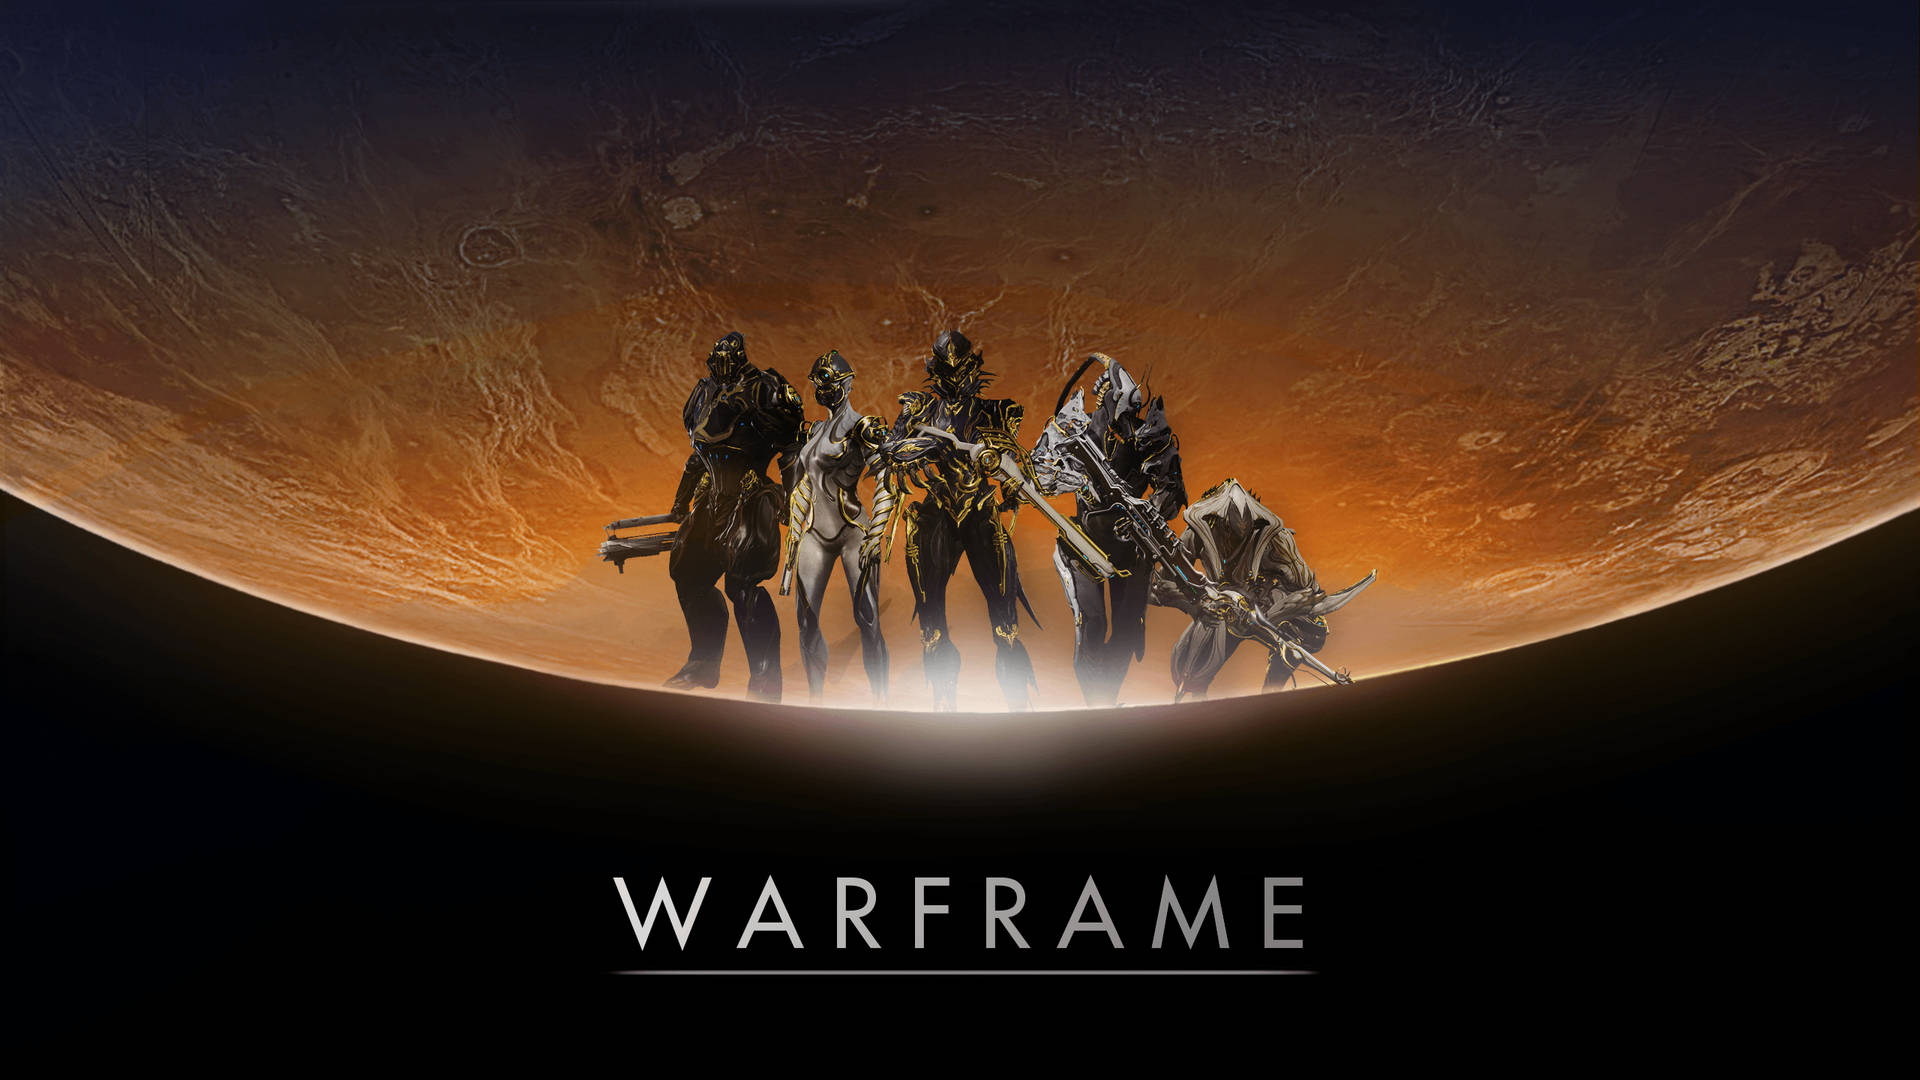 Noble Team - Warframe Halo Reach Crossover Wallpaper : Warframe Background